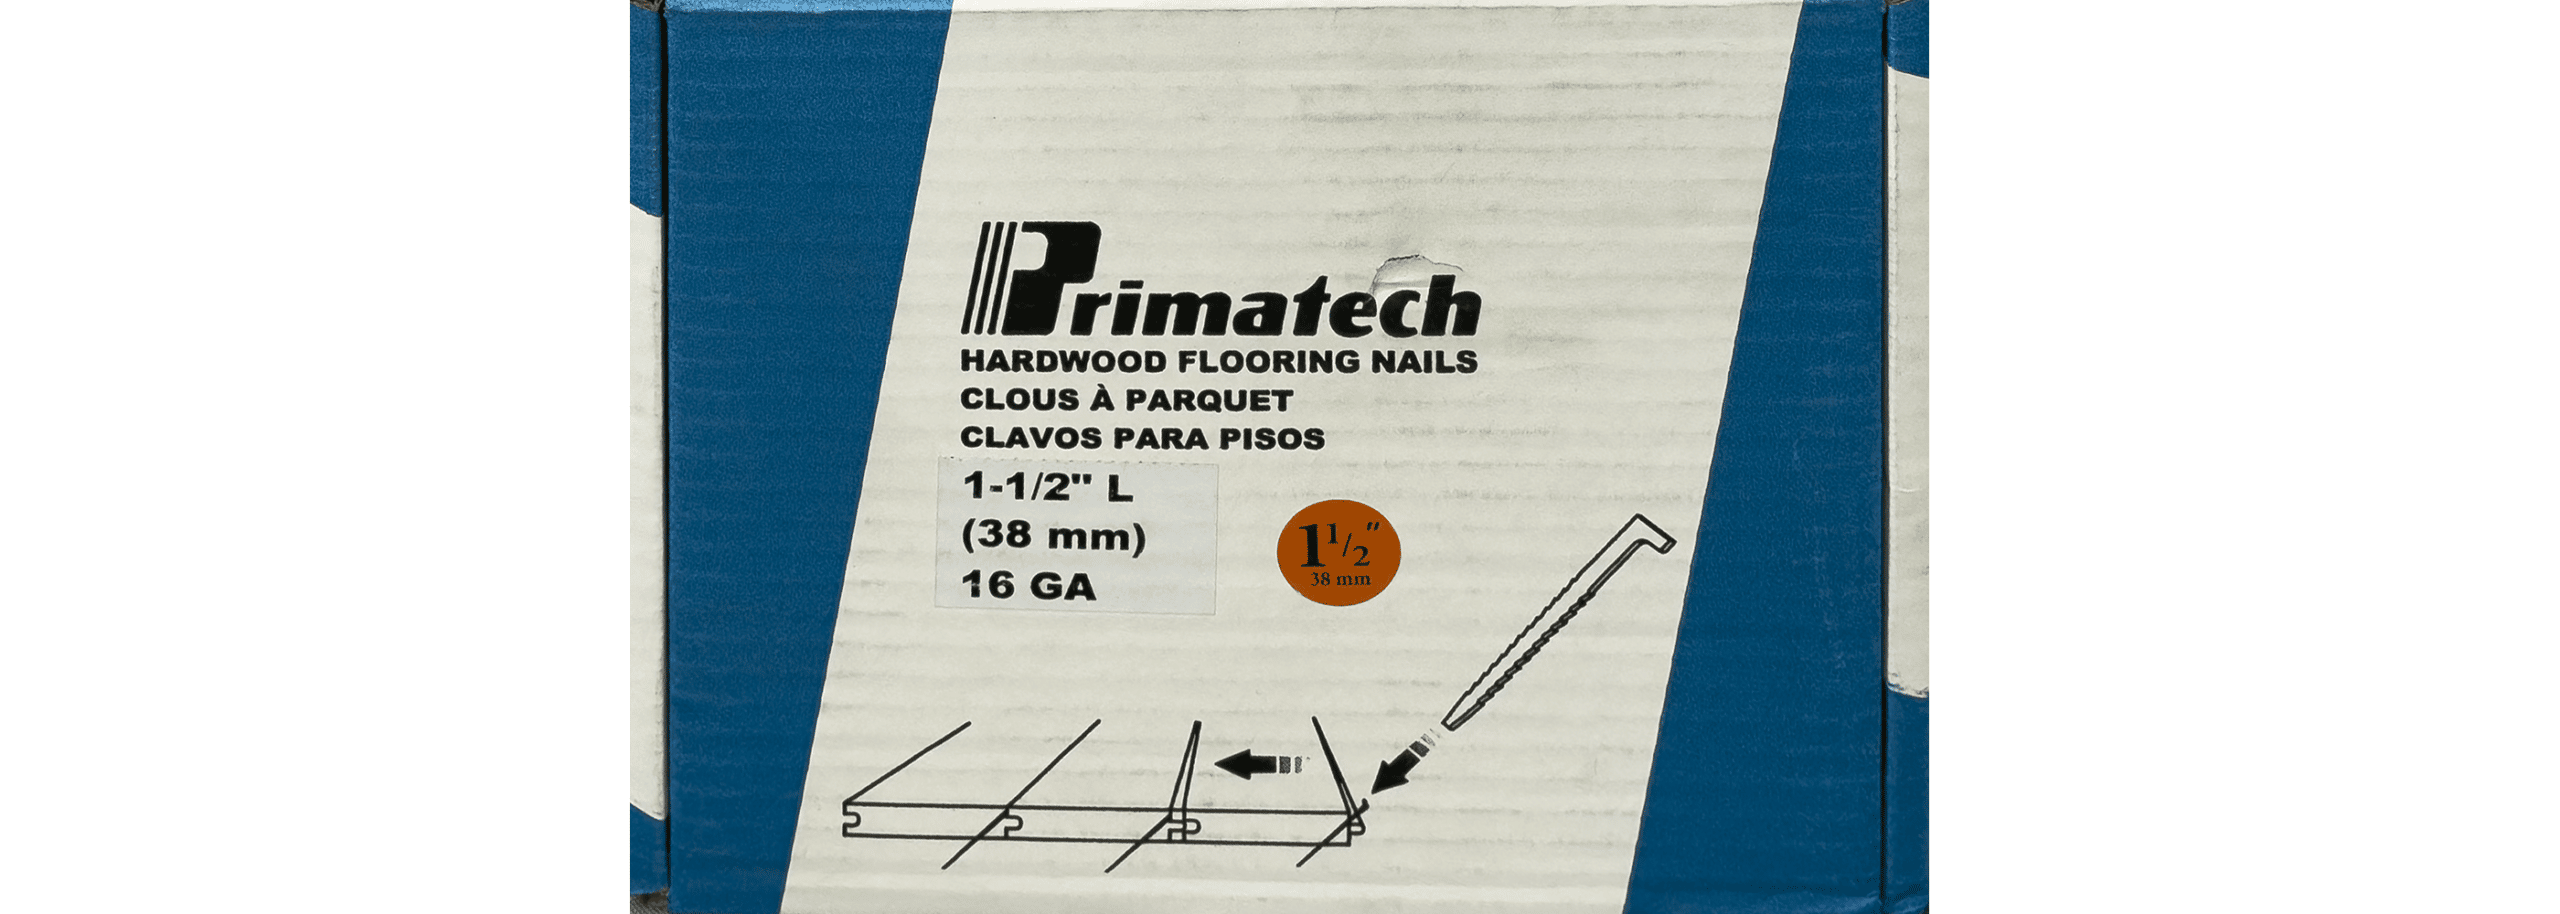 primatech 1-1/2 16g cleats